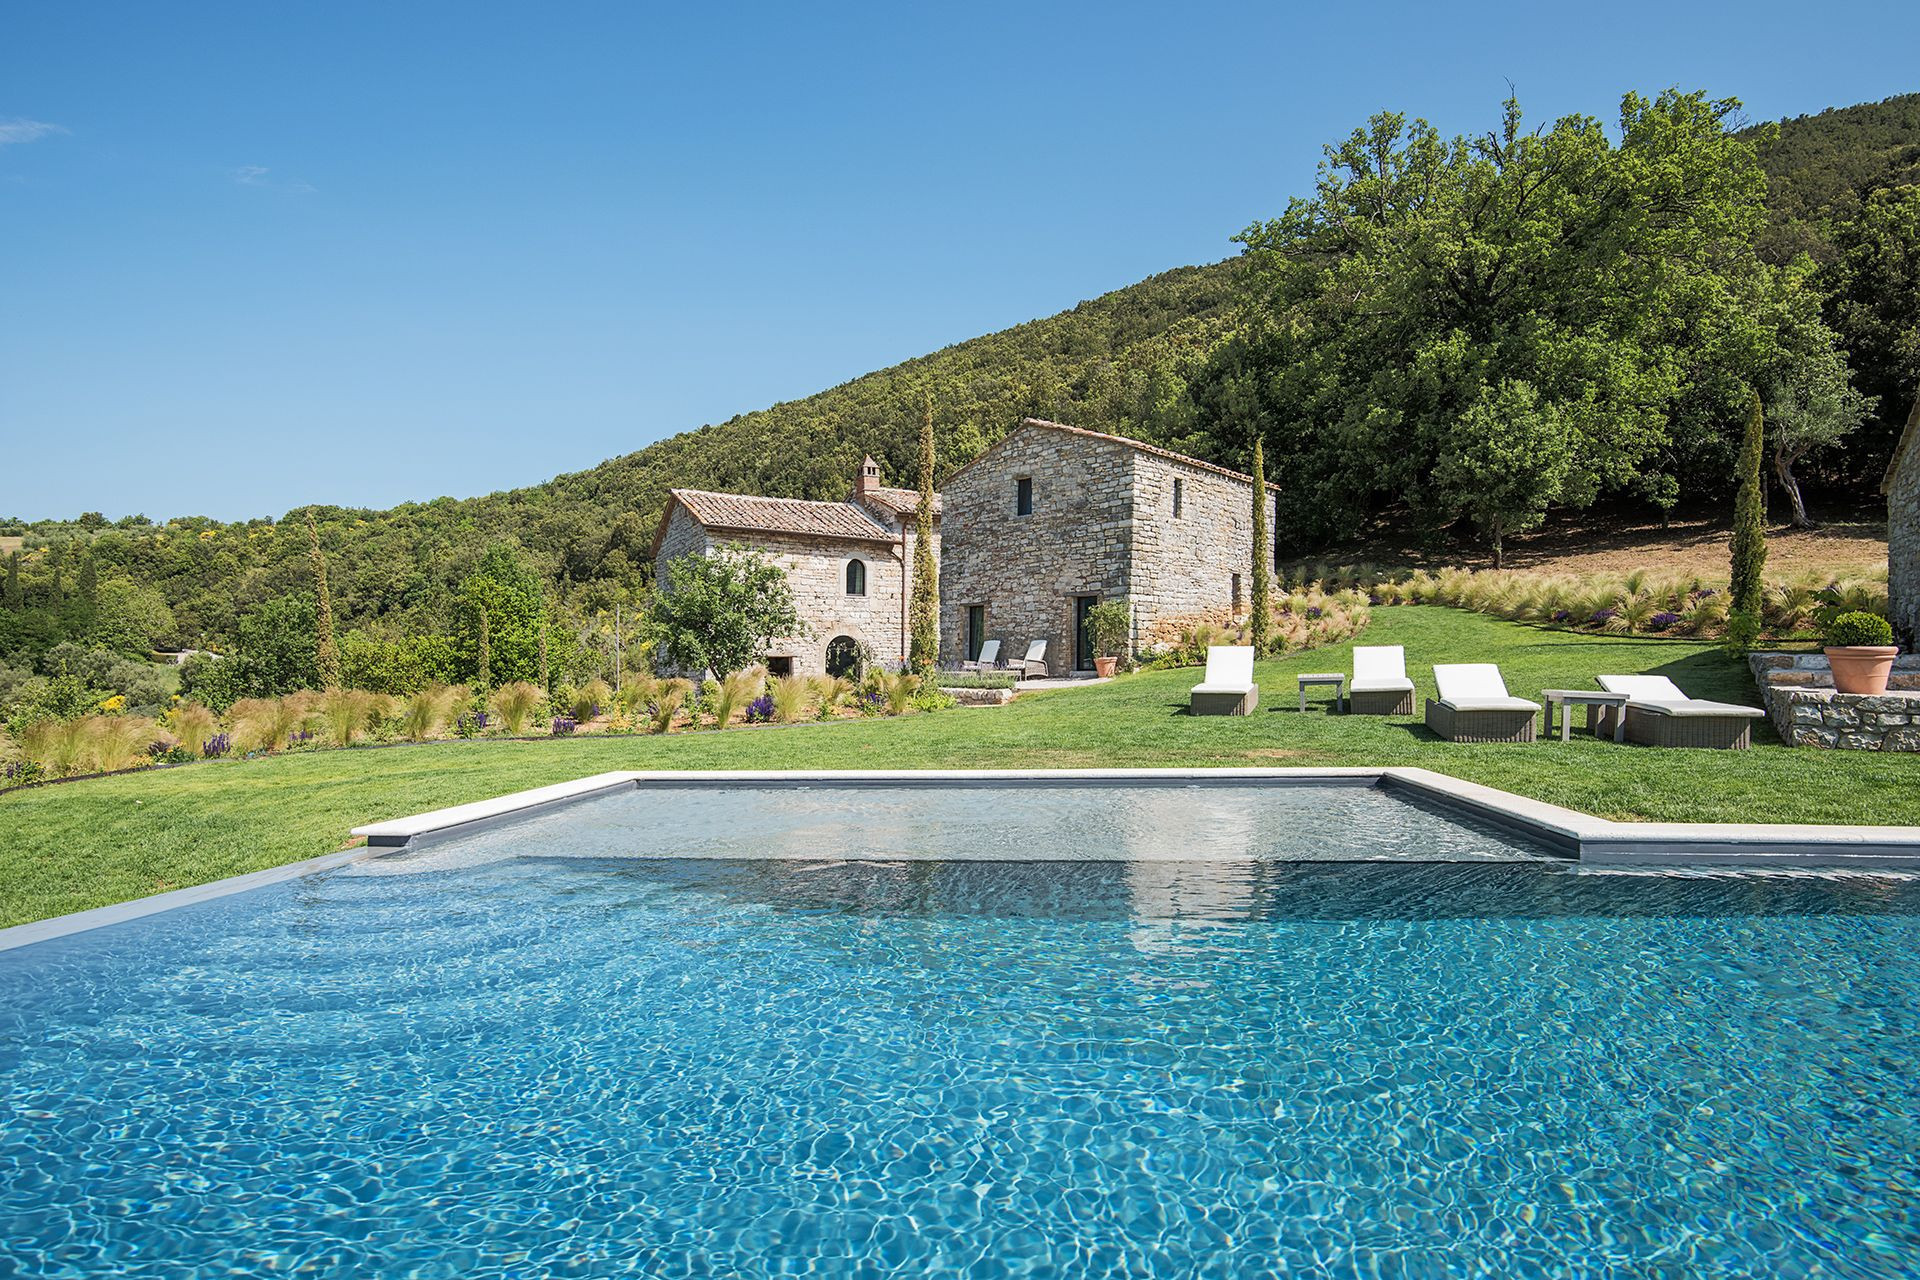 Seven of the best luxury villas to rent in Umbria